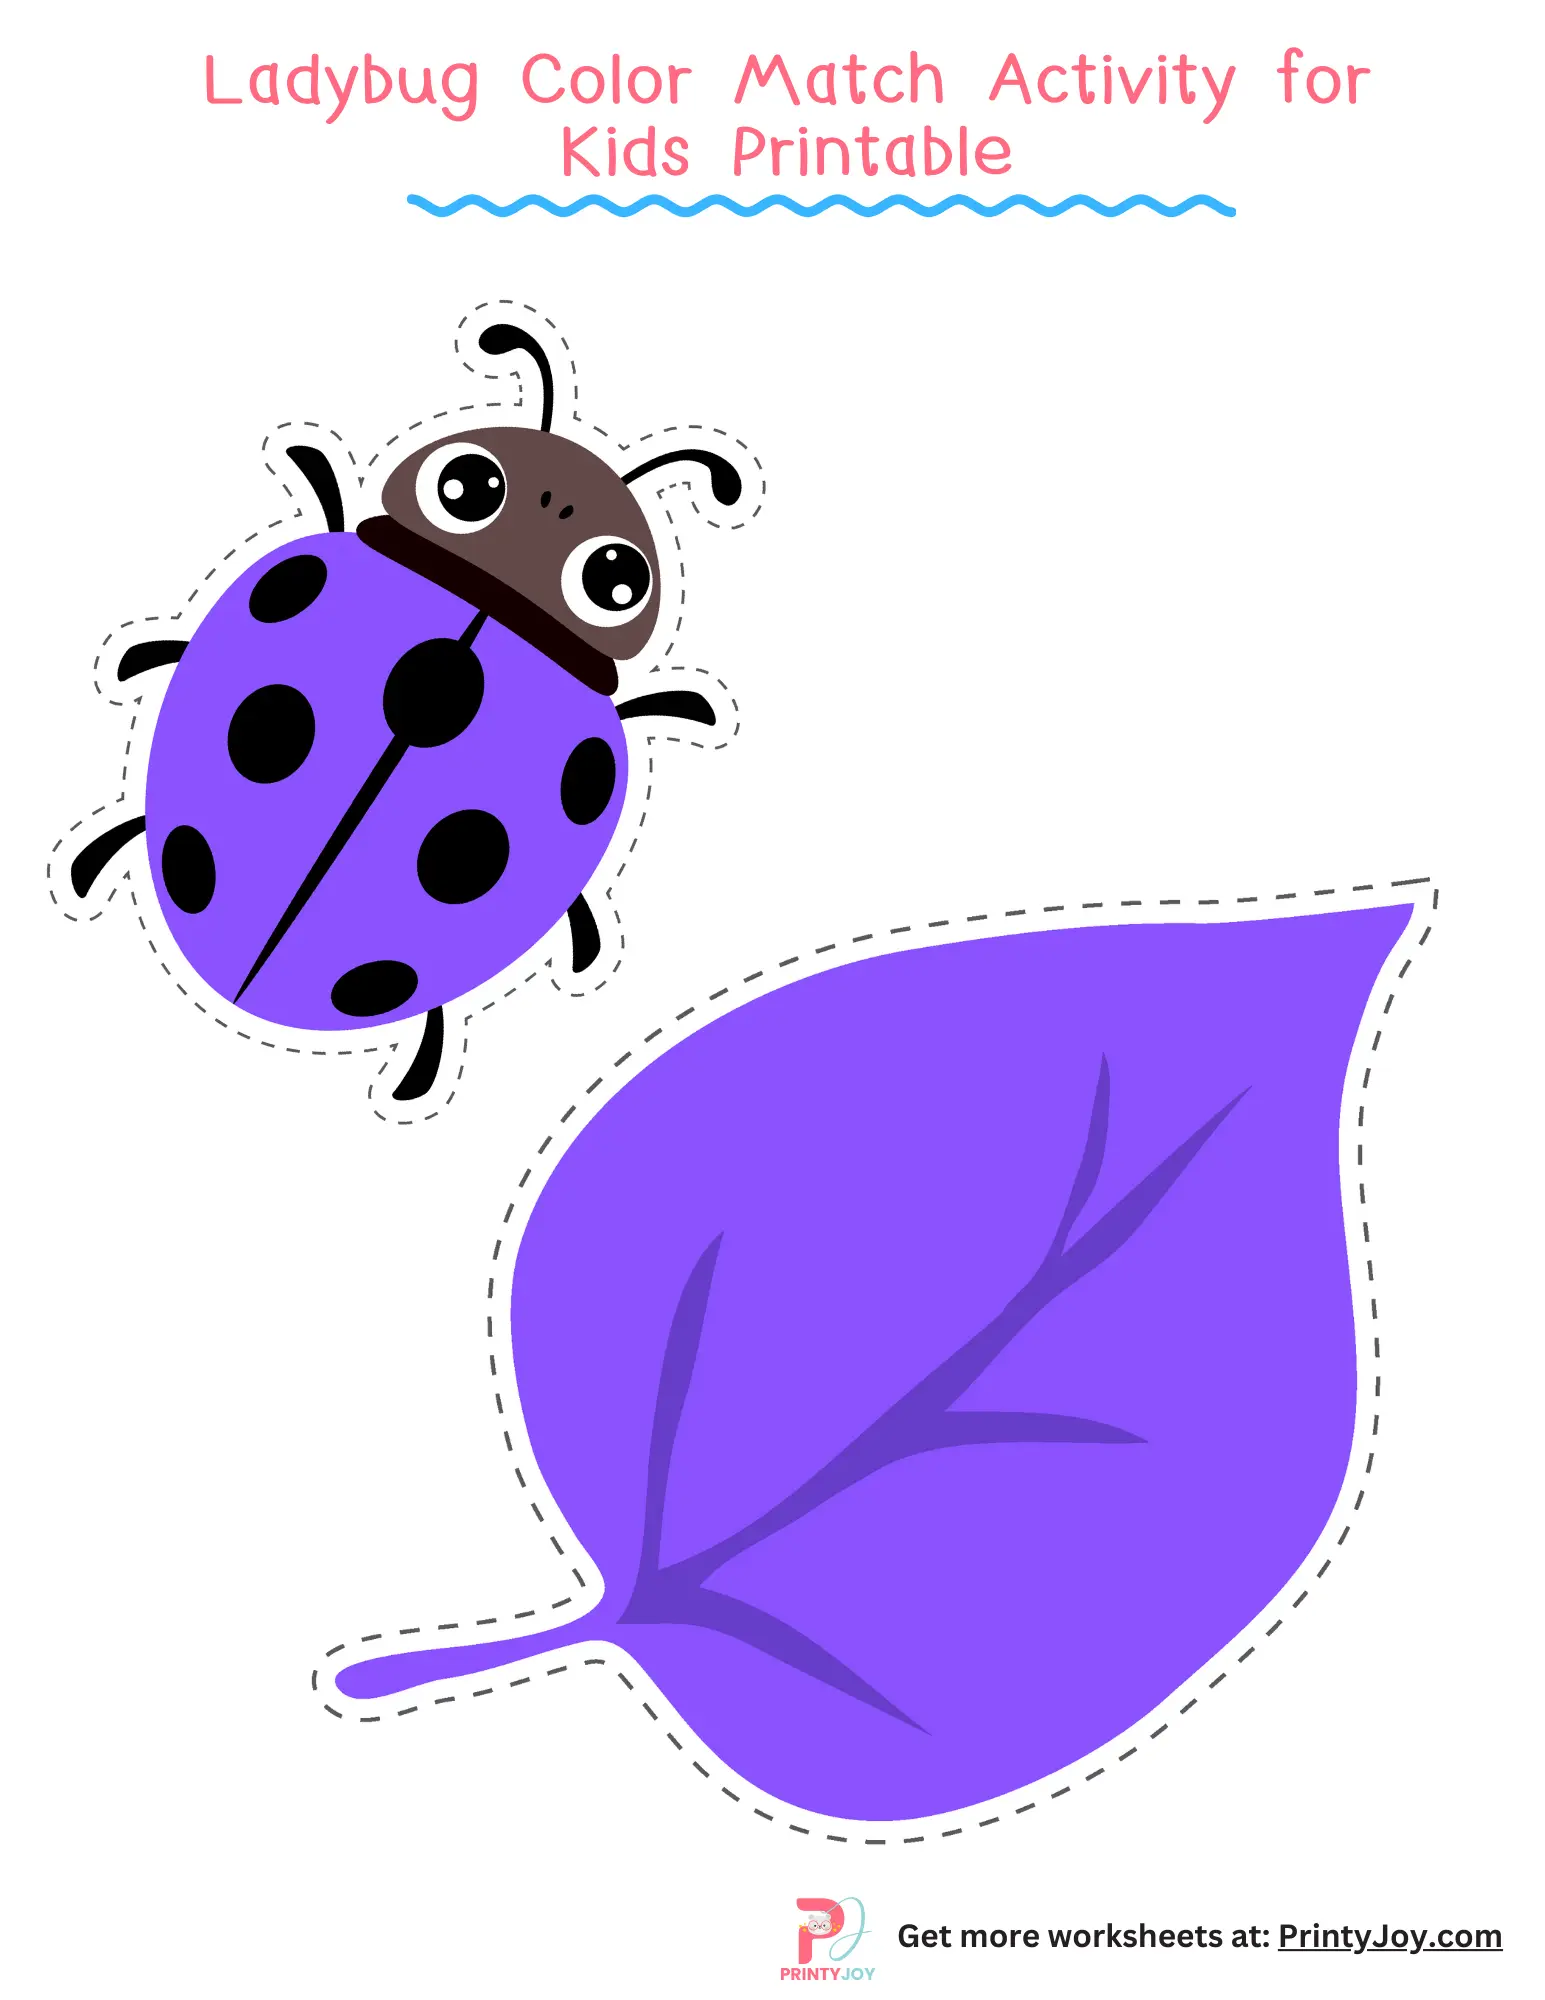 Ladybug Color Match Activity for Kids Printable